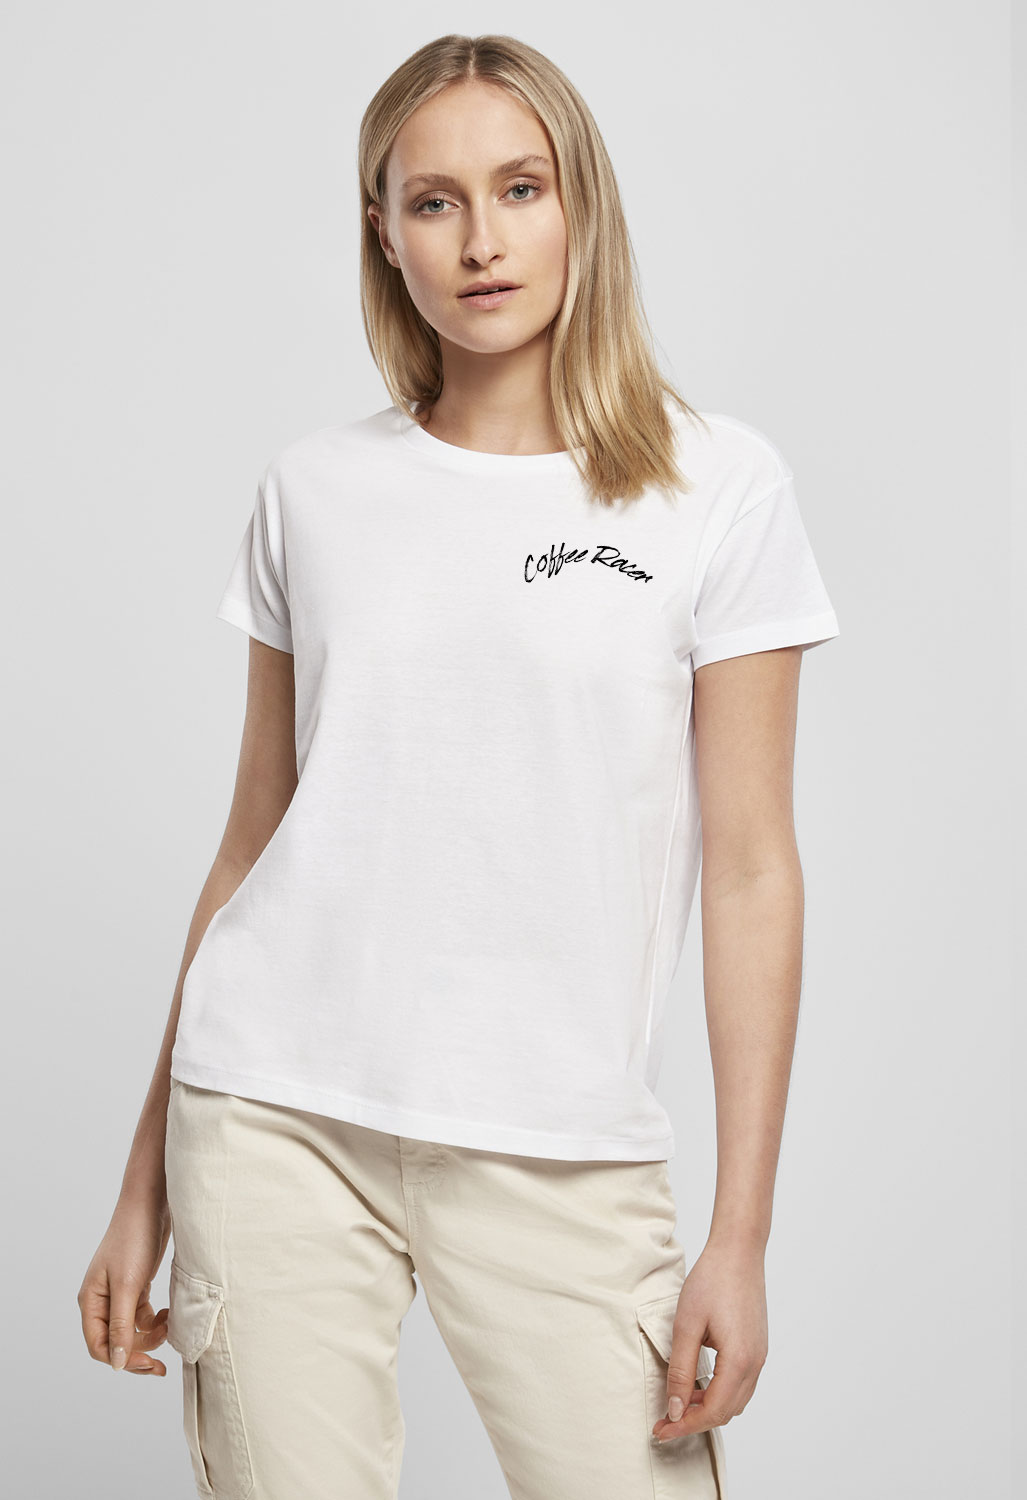 OV-Style CoffeeRacer LadyShirt white